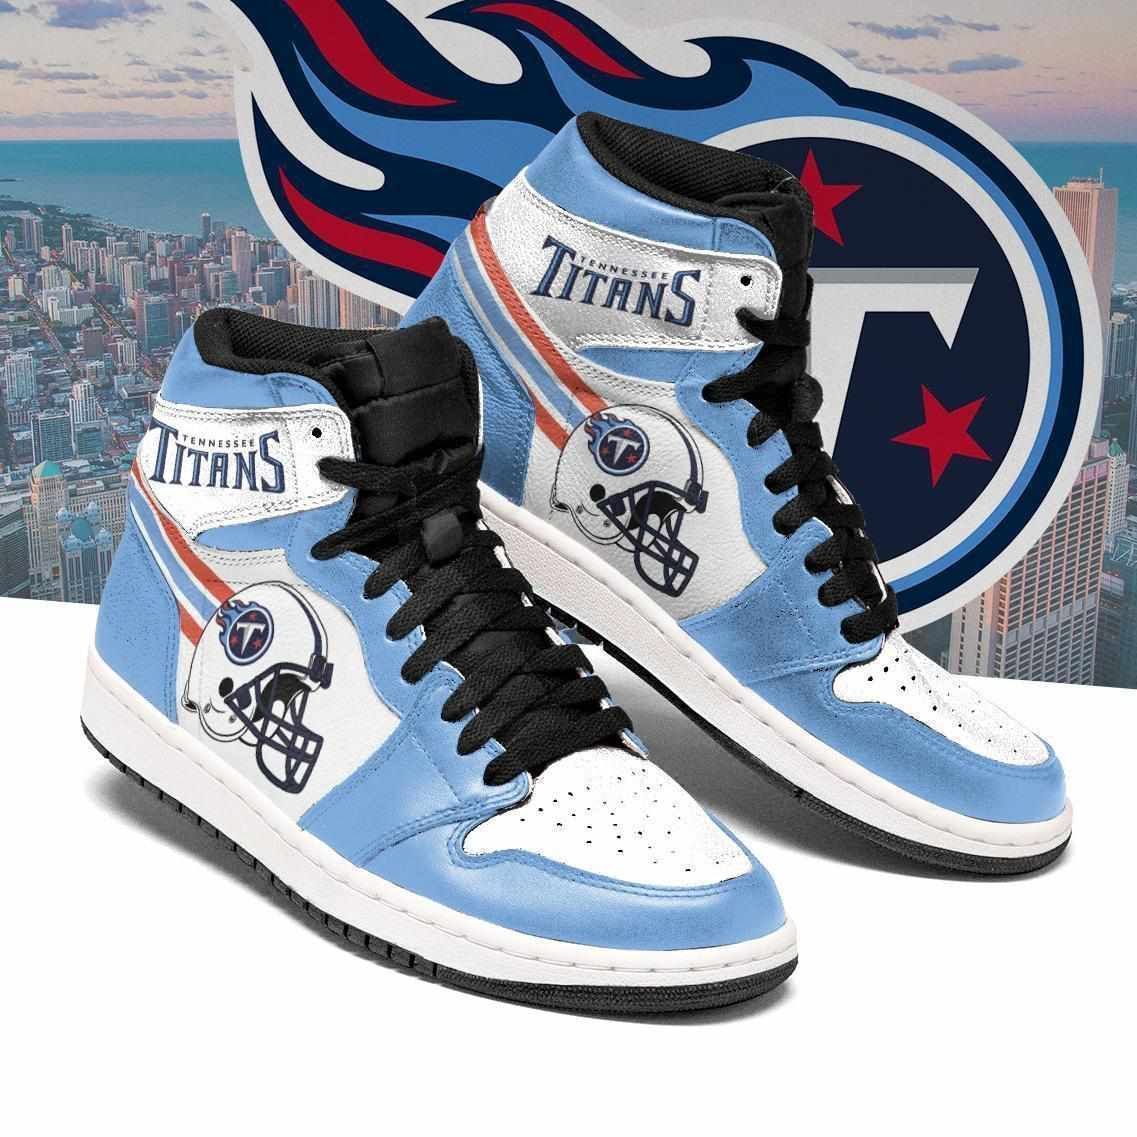 Nfl Tennessee Titans Air Jordan Shoes Sport